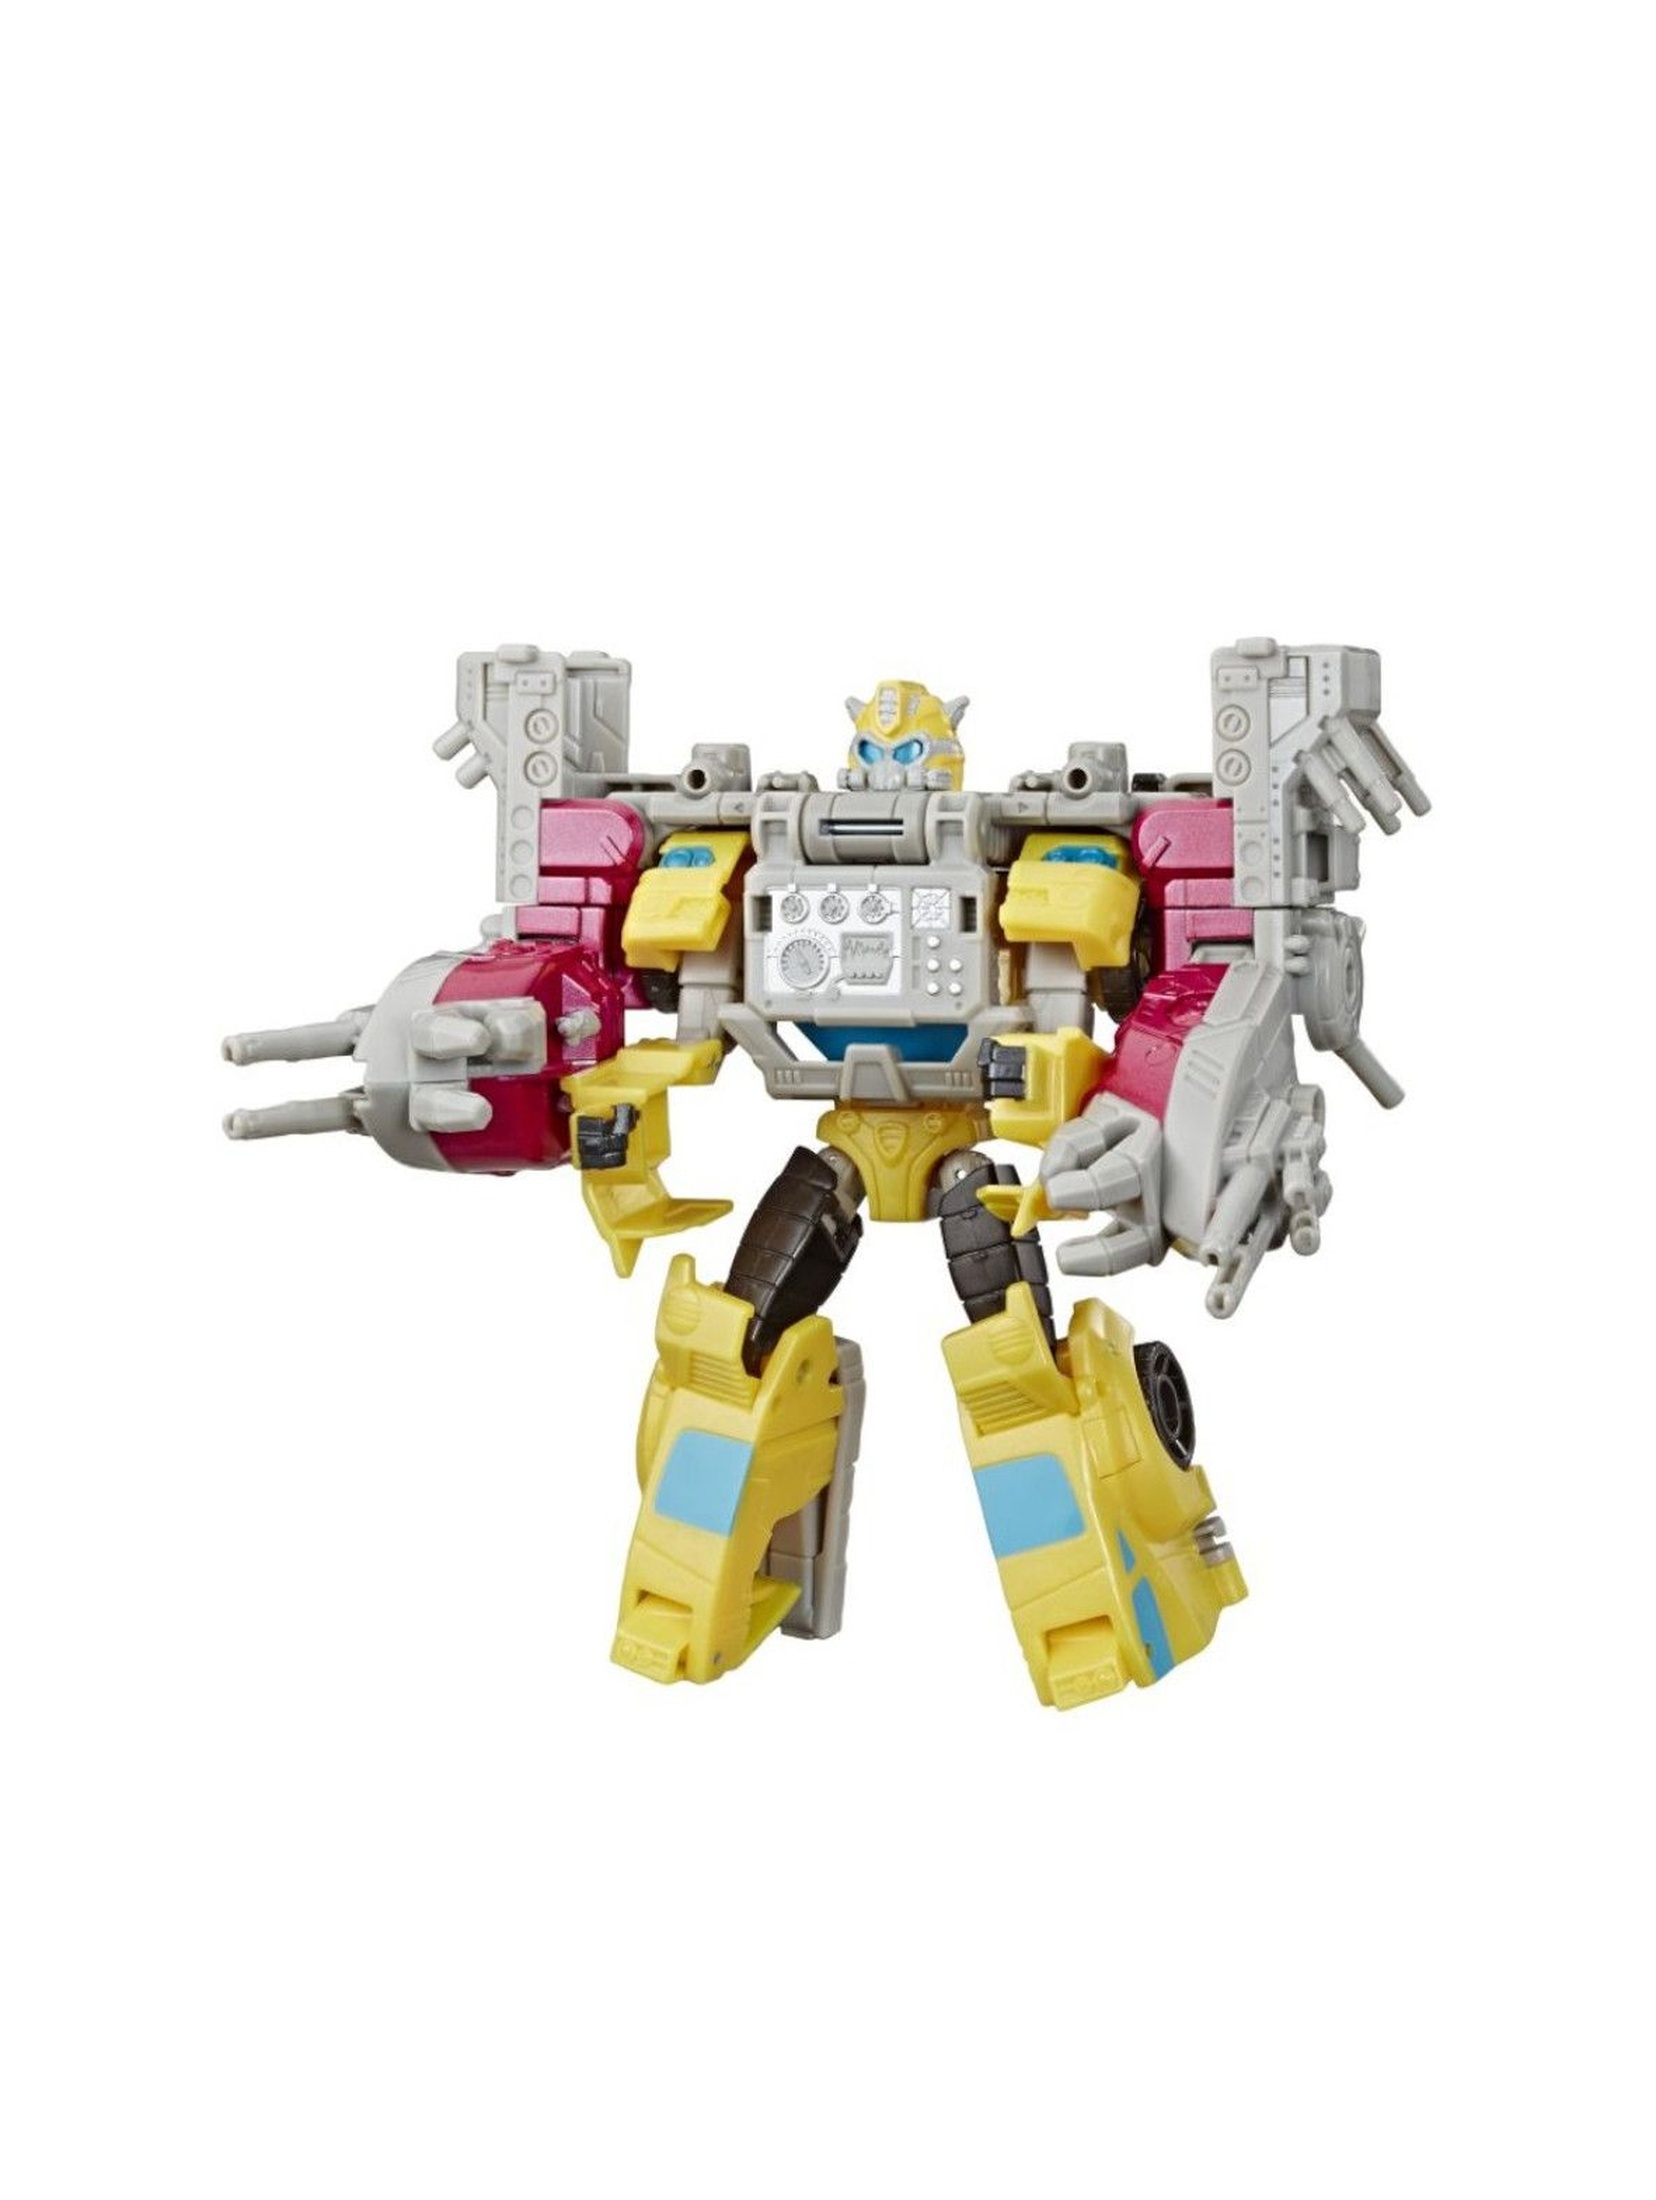 Transformers Spark armor elite class Bumblebee 6+